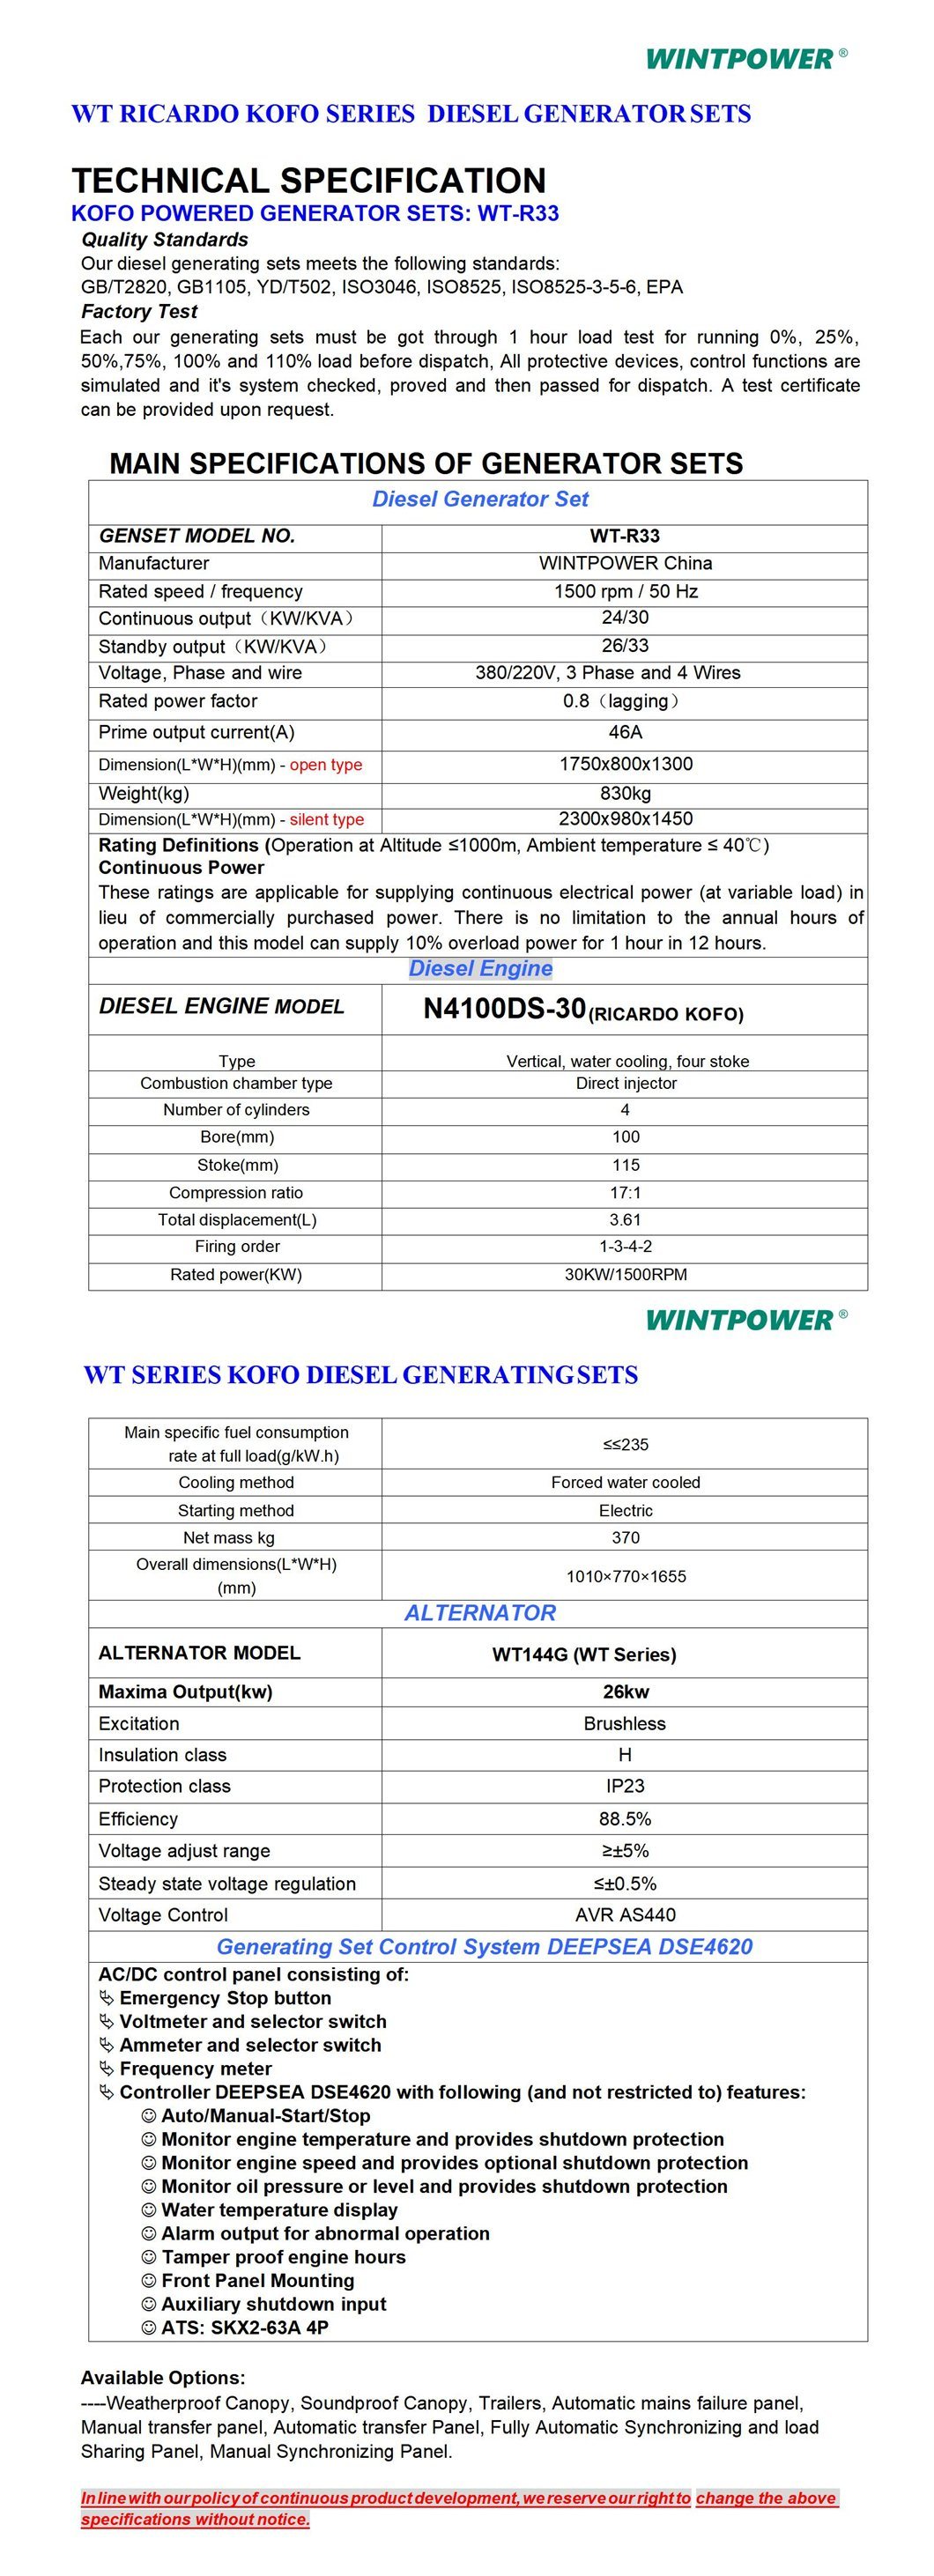 Weichai Kofo Ricardo Diesel Generator Set Dg Genset 30kVA N4100ds-30 40kVA N4105ds-38 50kVA N4105ds-42 60kVA N4105zds 75kVA N4105zds 83kVA R4105bzds